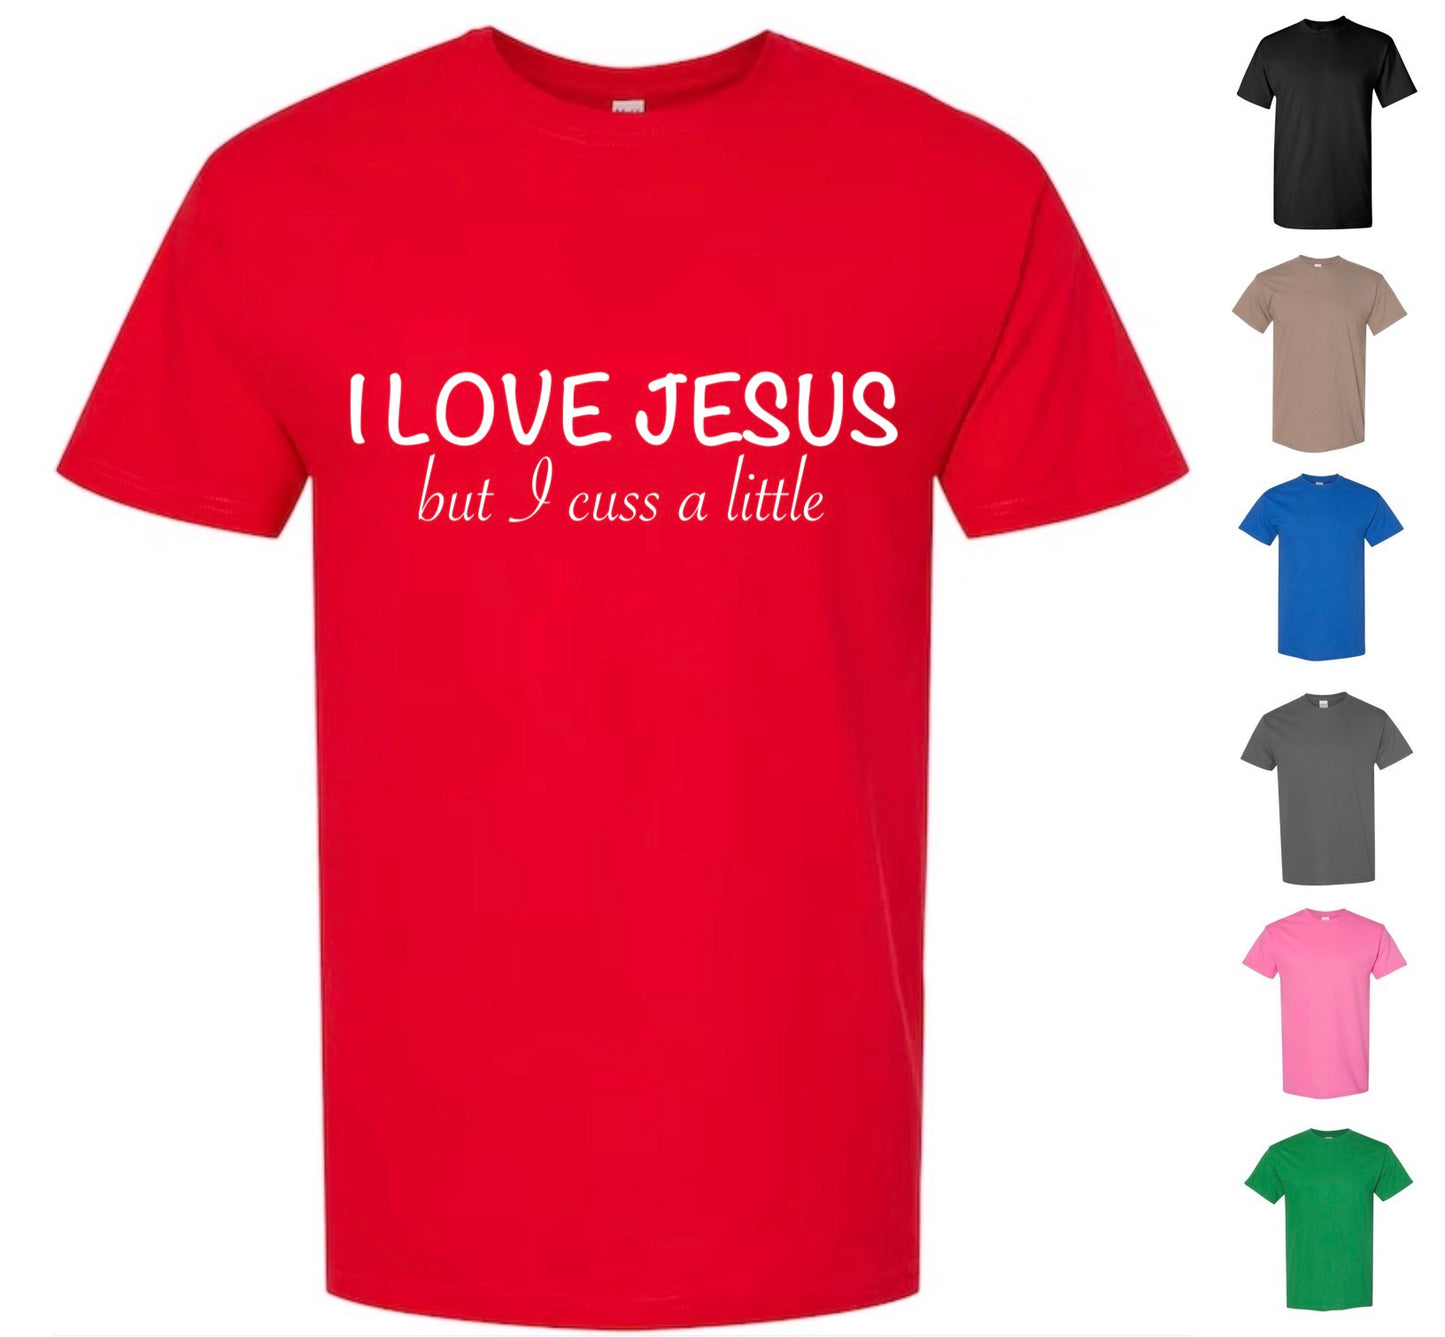 I love Jesus, but I cuss a little T-shirt (FREE Shipping)